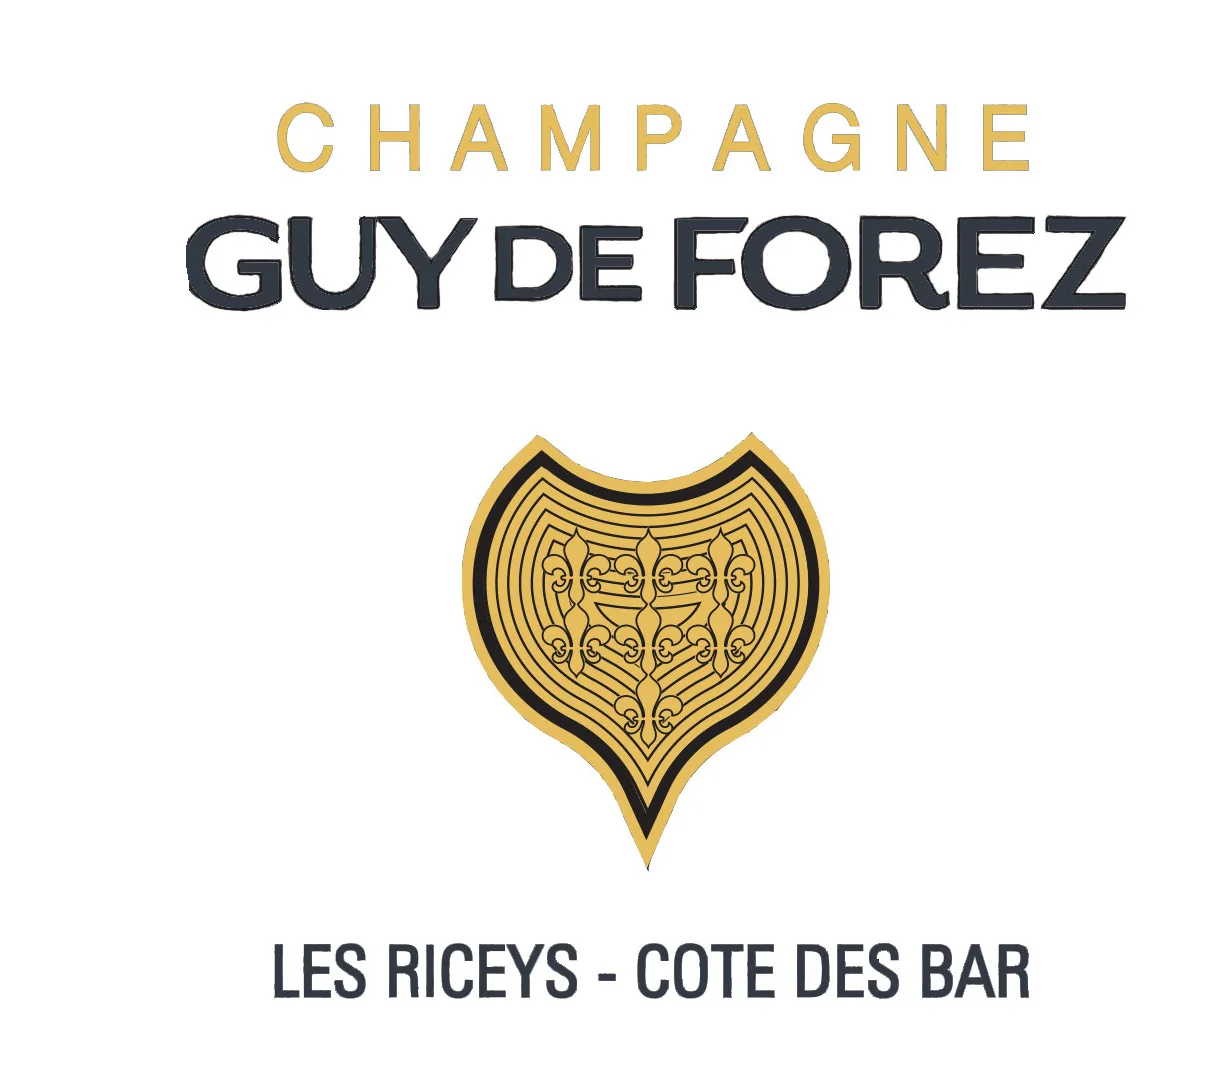 Champagne Guy de Forez